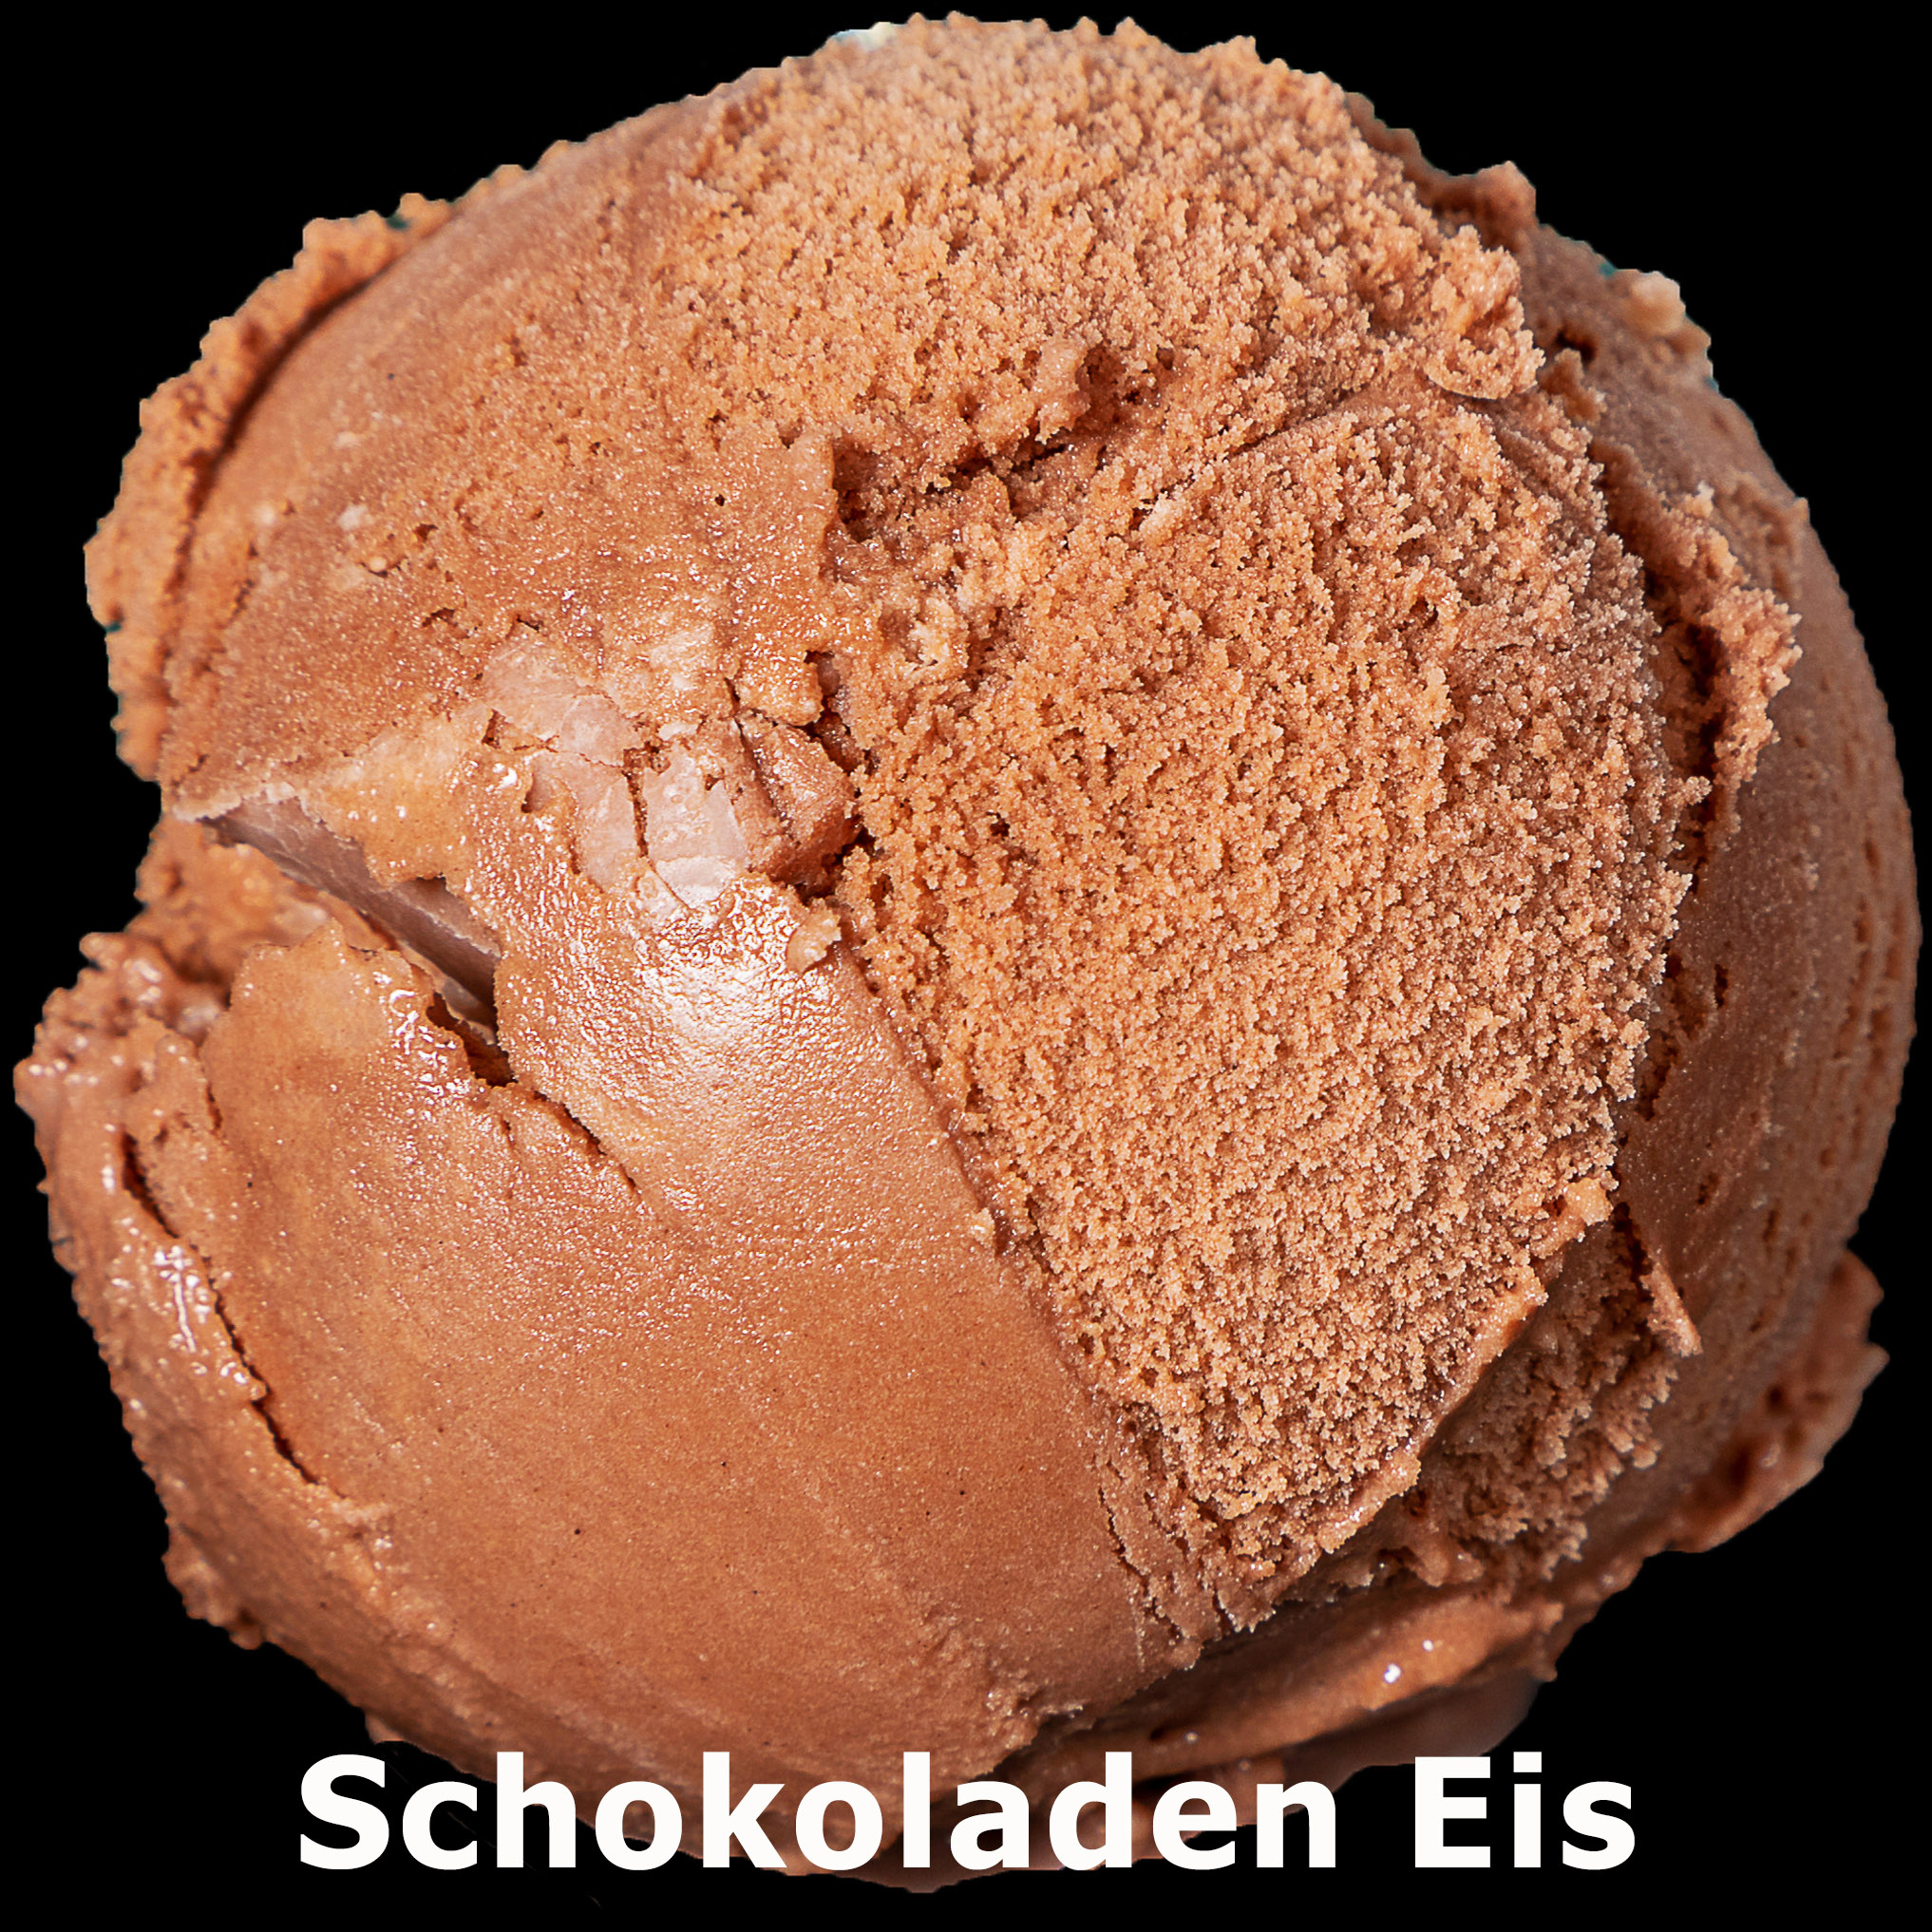 154. Schokoladen Eis